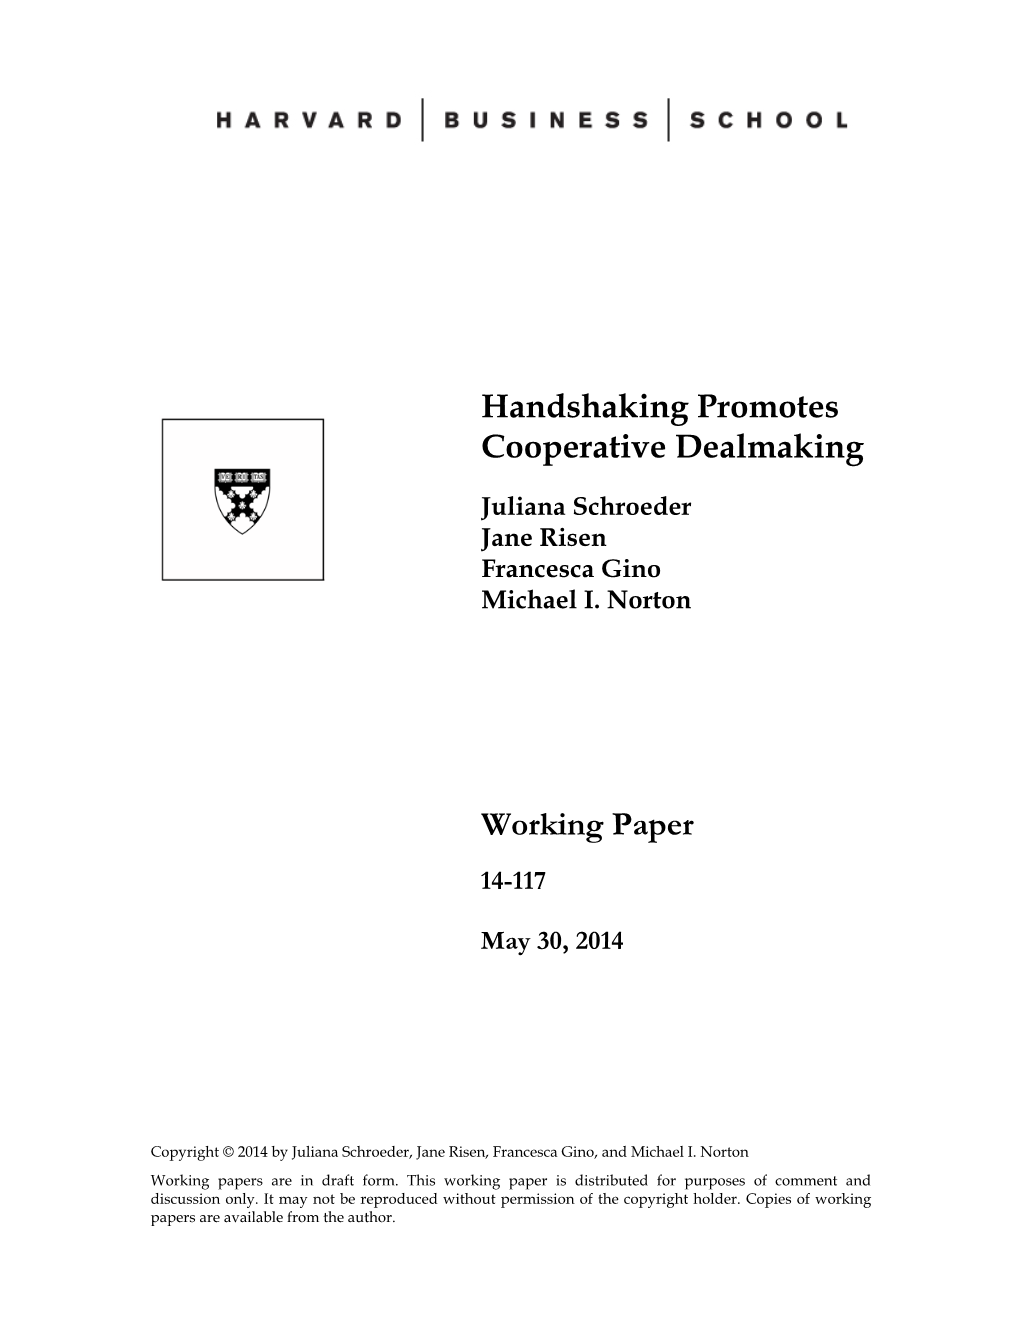 Handshaking Promotes Cooperative Dealmaking Working Paper